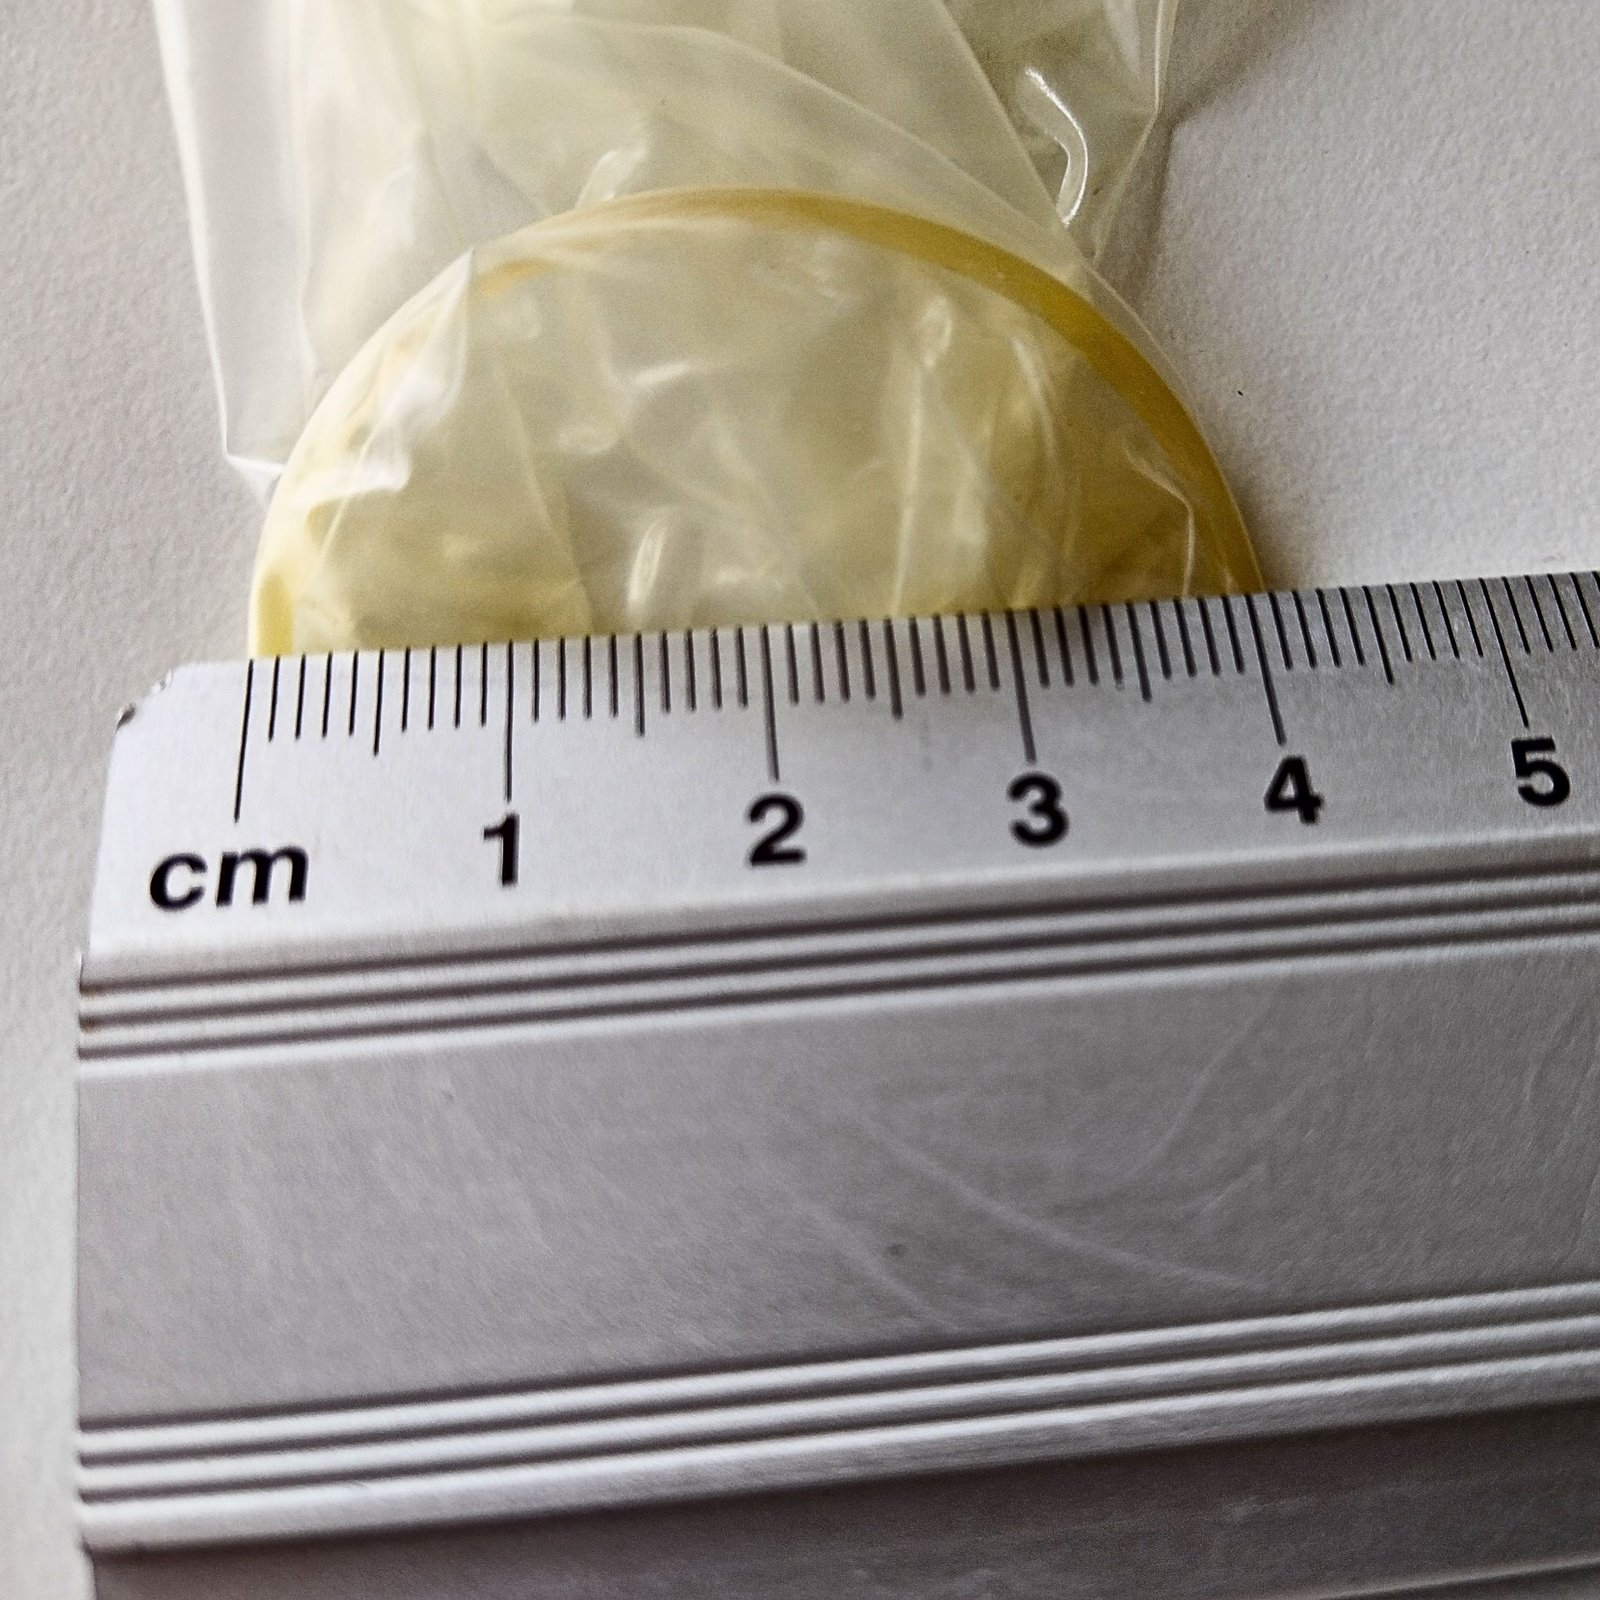 Measuring the diameter of a condom